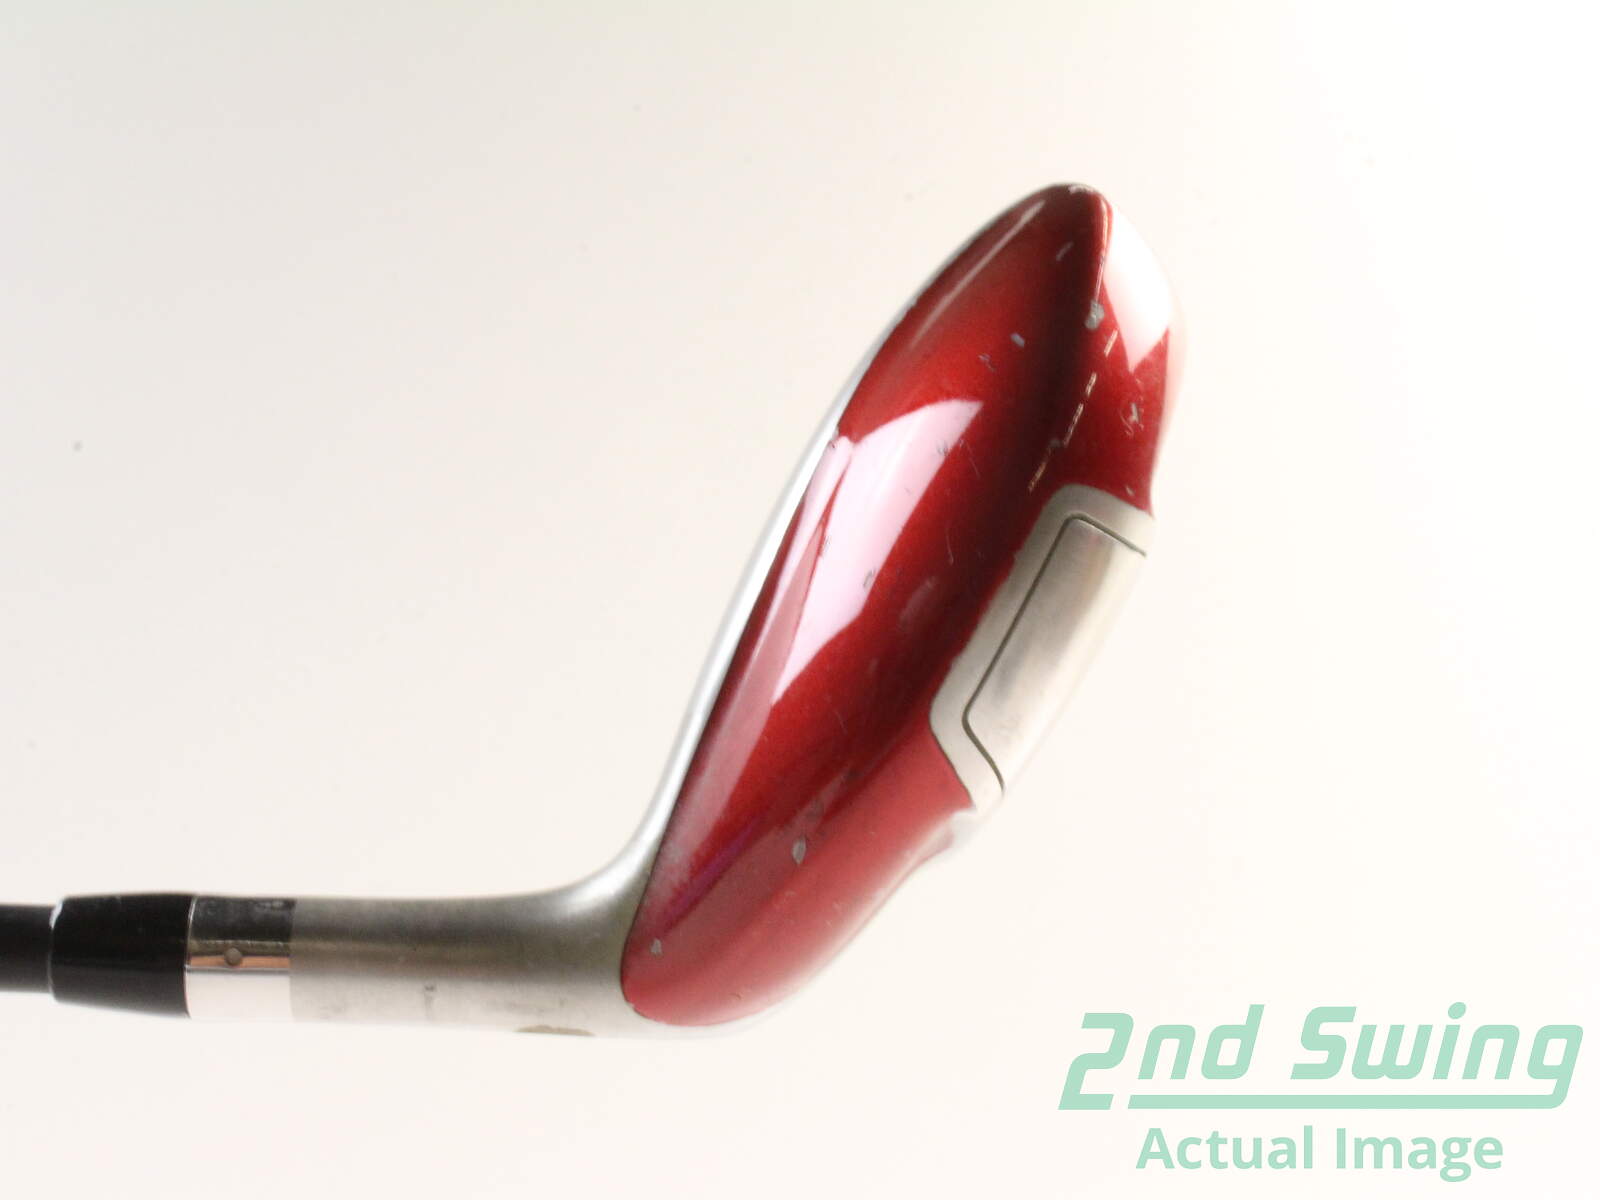 used nike cpr hybrid golf clubs